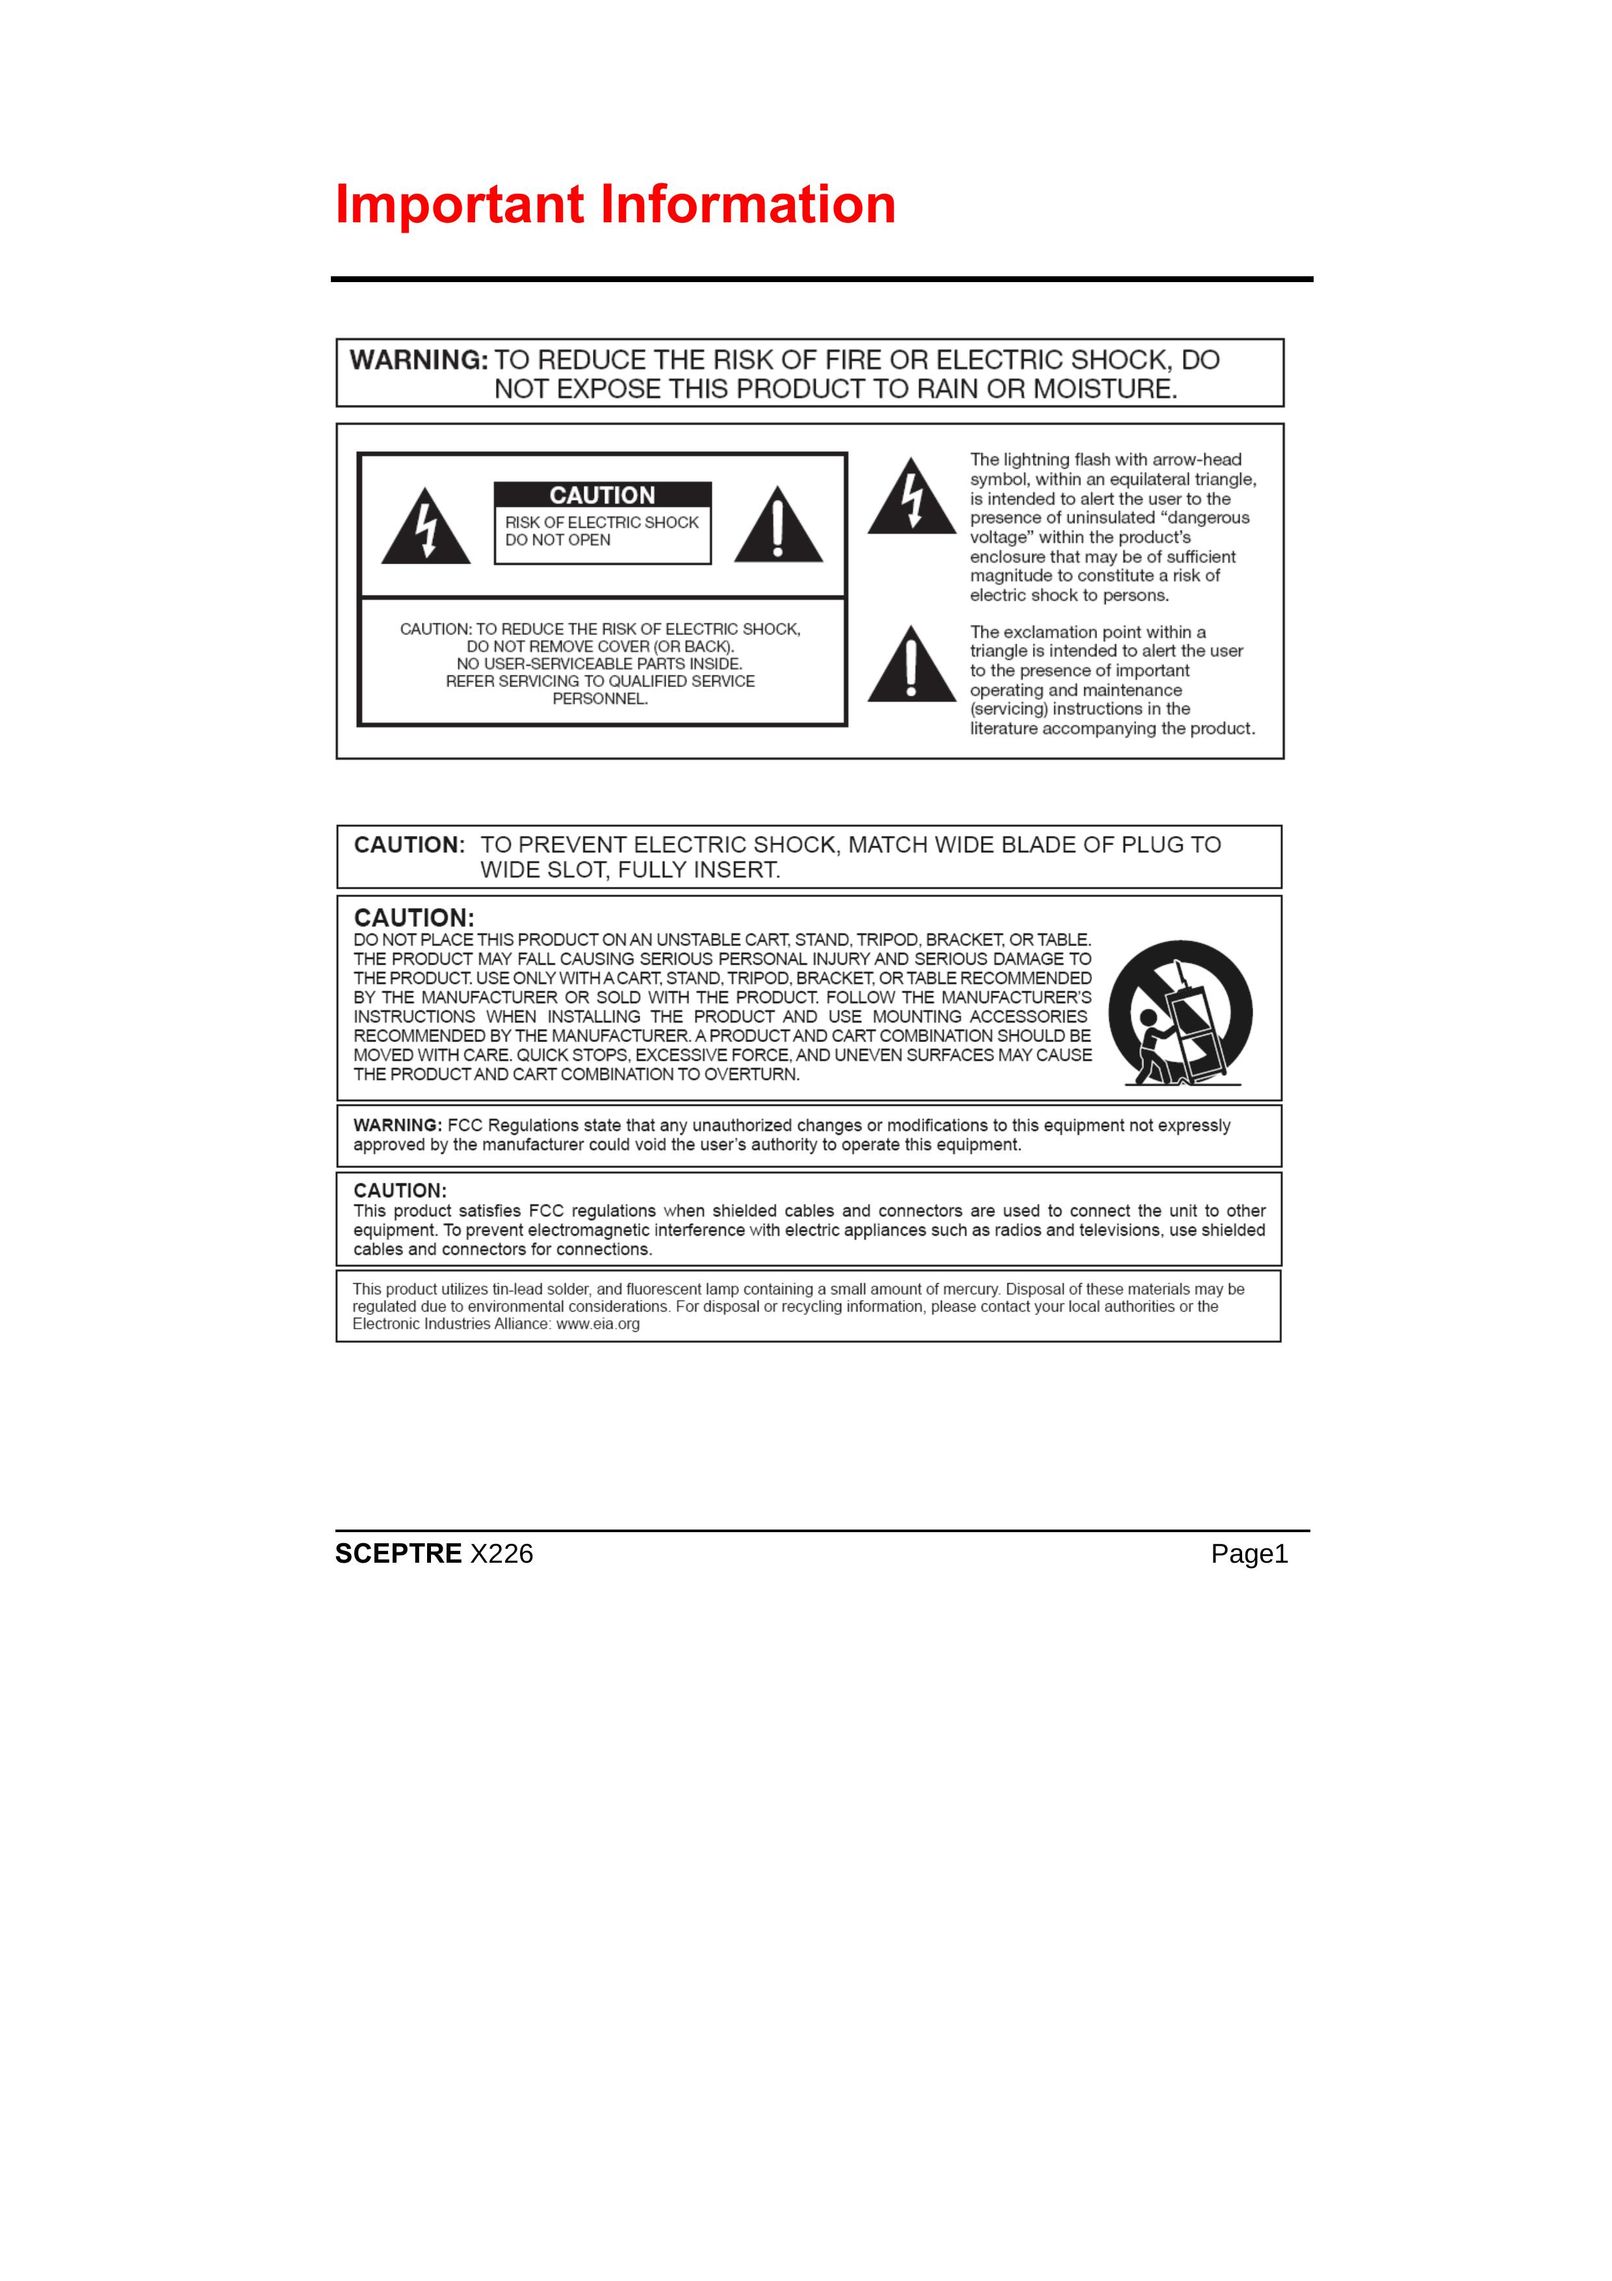 Sceptre Technologies X226 Car Video System User Manual